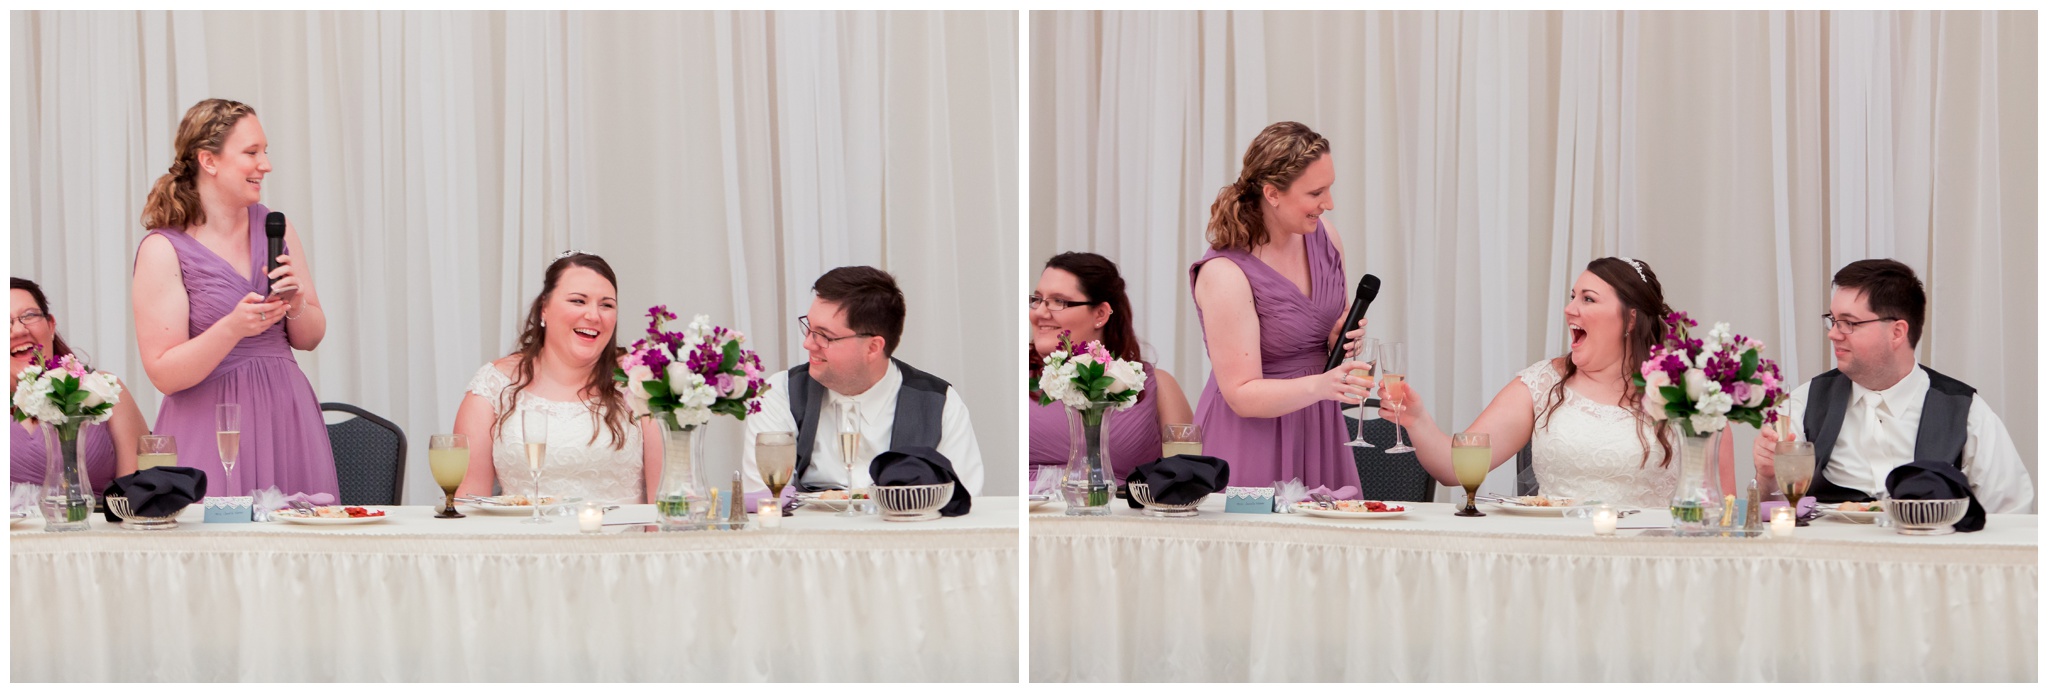 maid of honor gives toast during wedding reception at Bel Air Events Kokomo